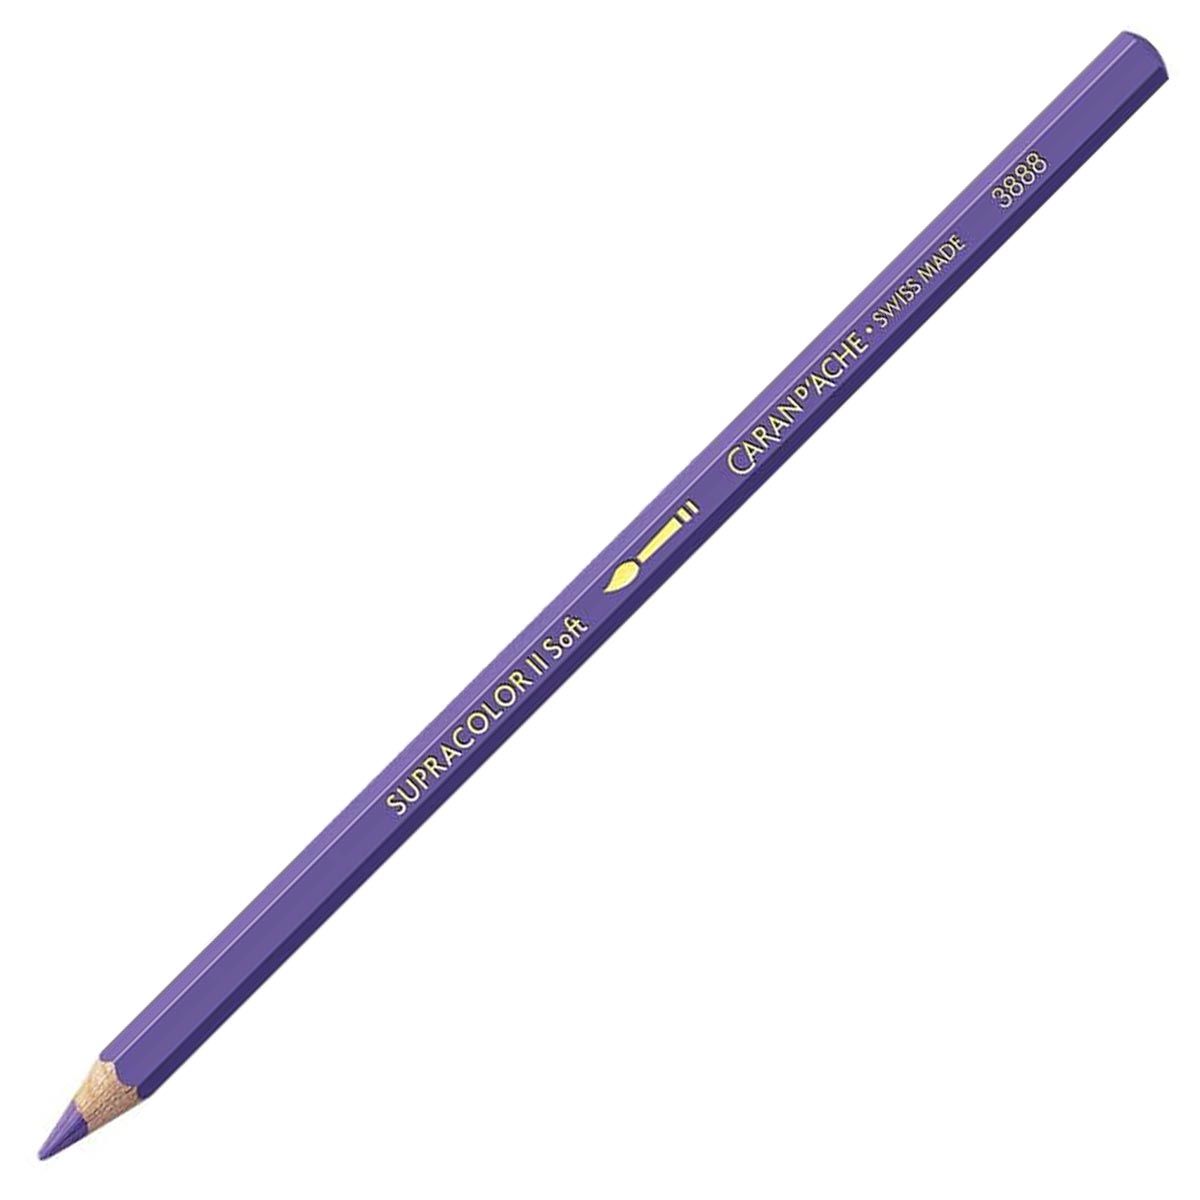 Caran d'Ache Supracolor ll Soft Aquarelle Pencil - Periwinkle Blue 131